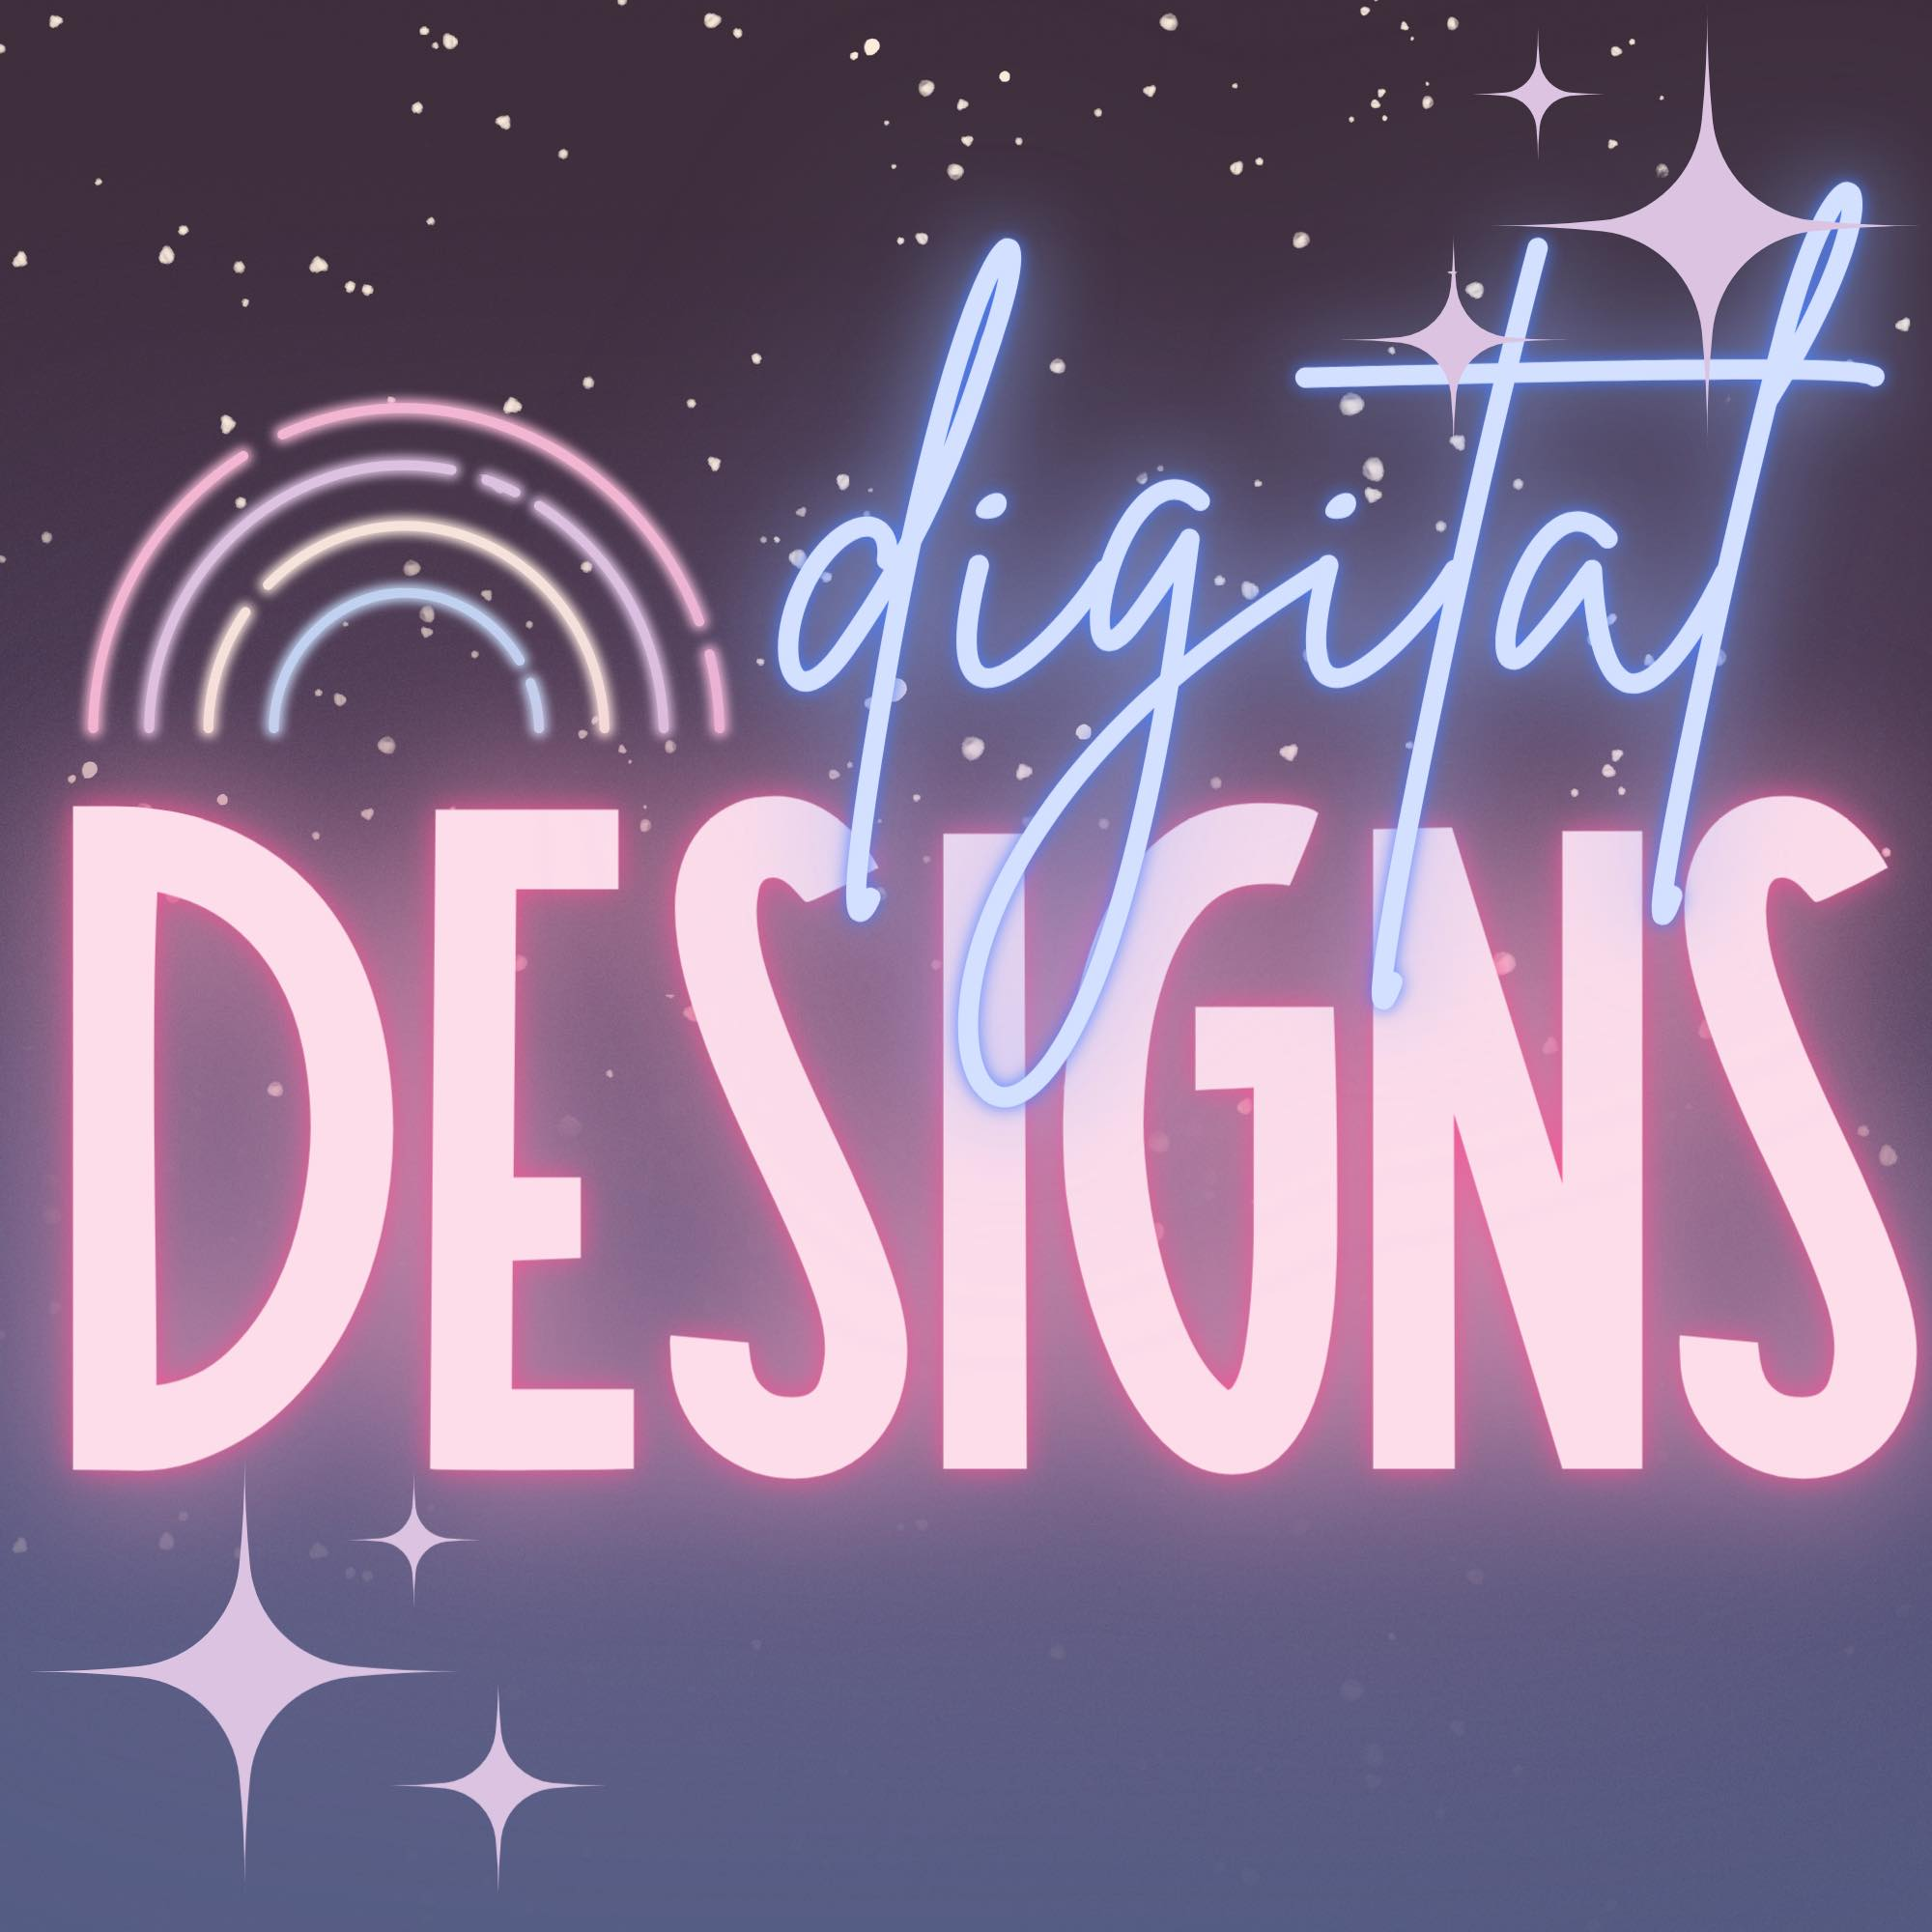 Digital Designs